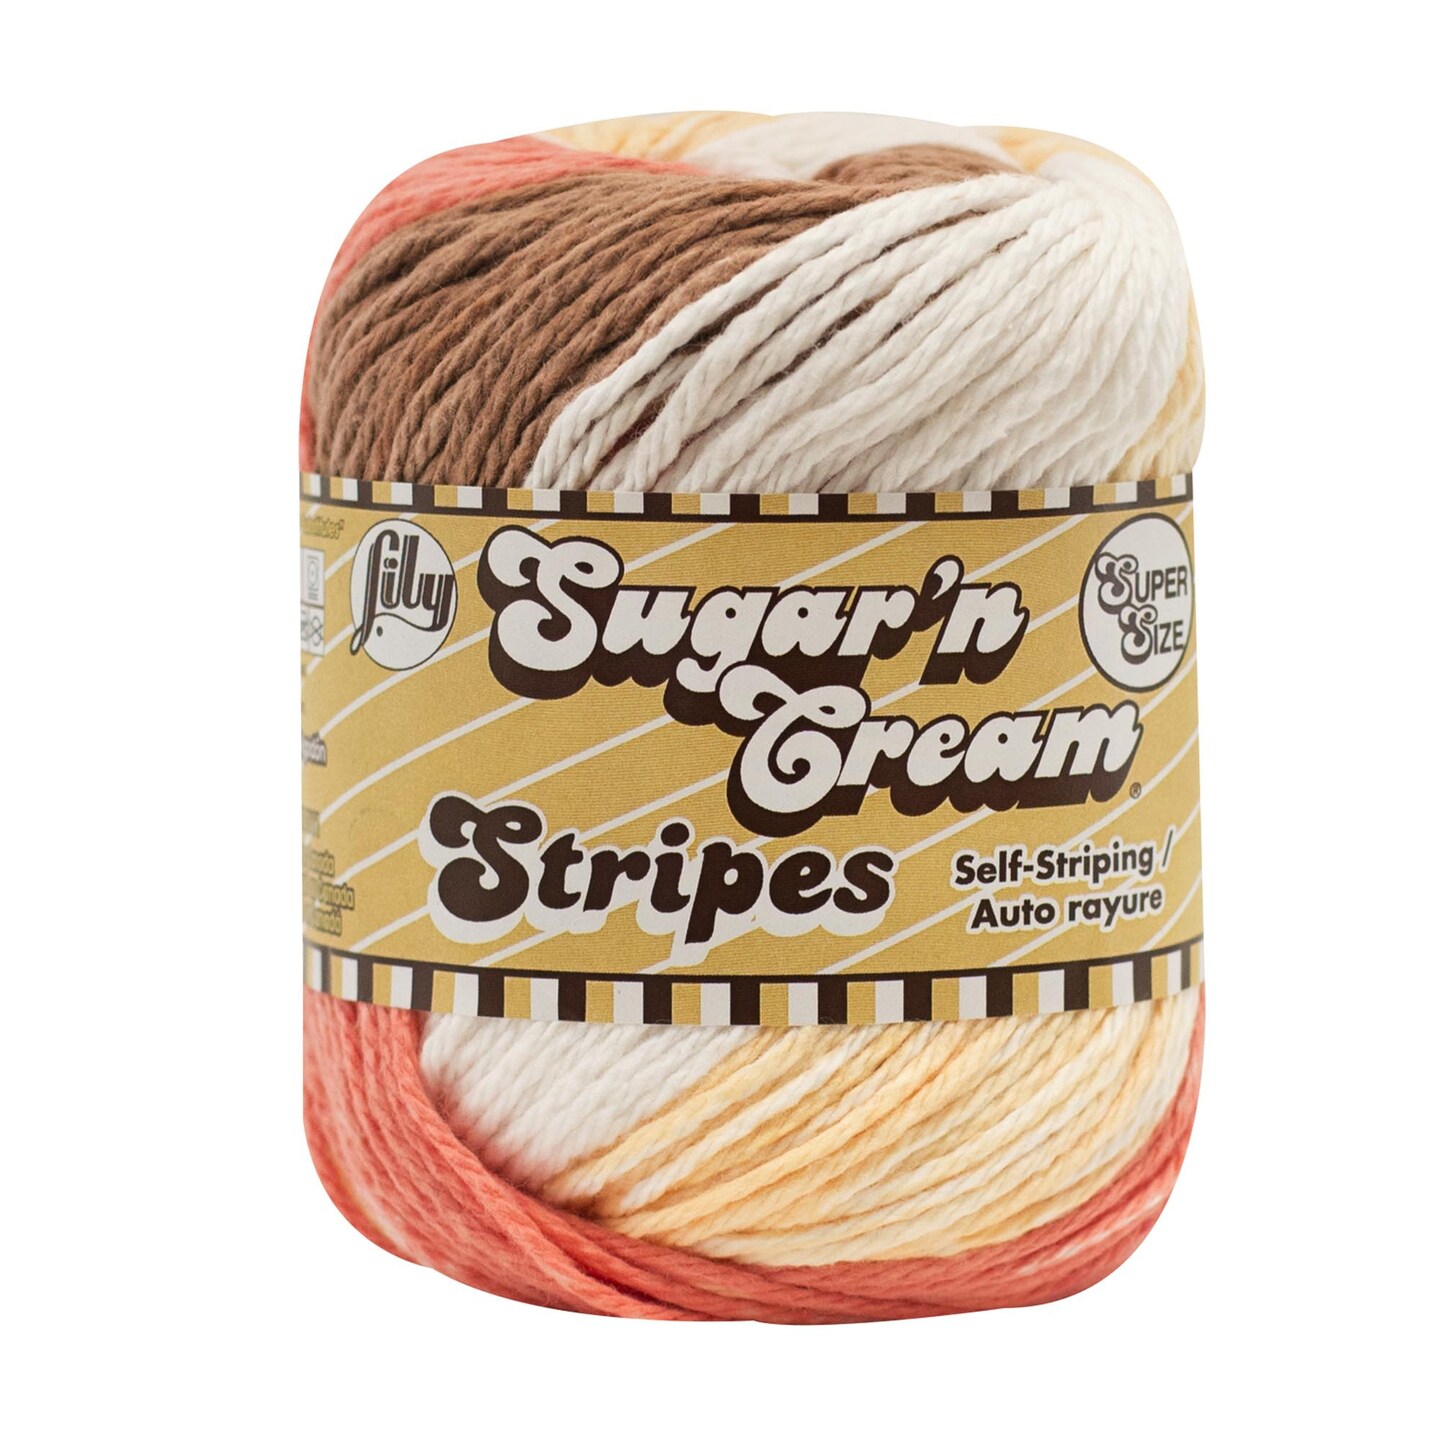 Lily Sugar'N Cream Natural Stripes Yarn - 6 Pack of 57g/2oz